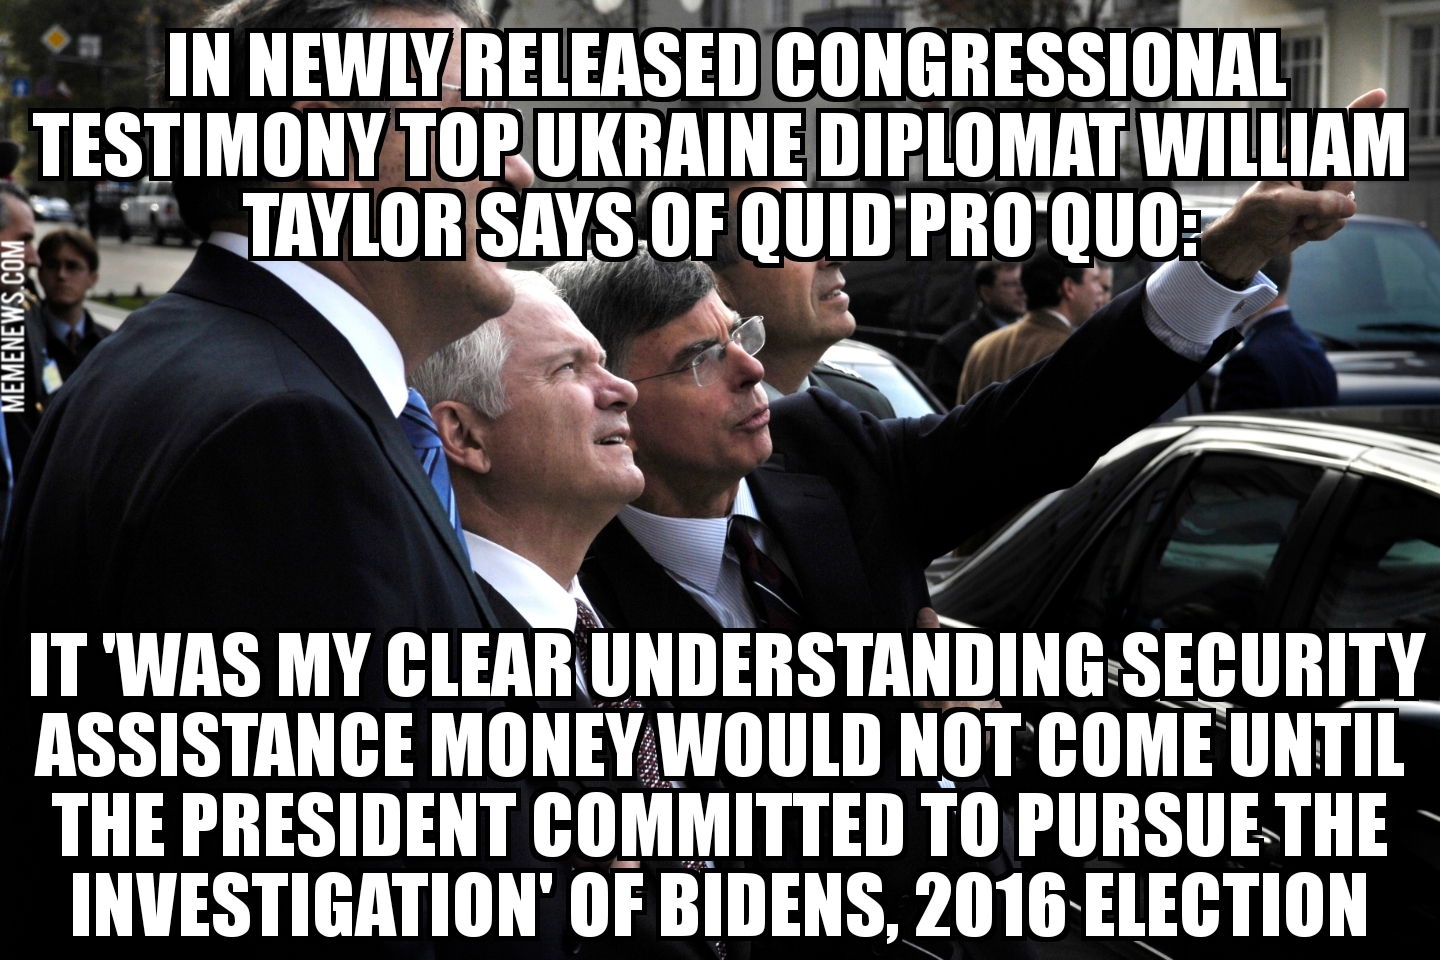 Bill Taylor testified it was his ‘clear understanding’ Ukraine military aid was tied to Biden investigation